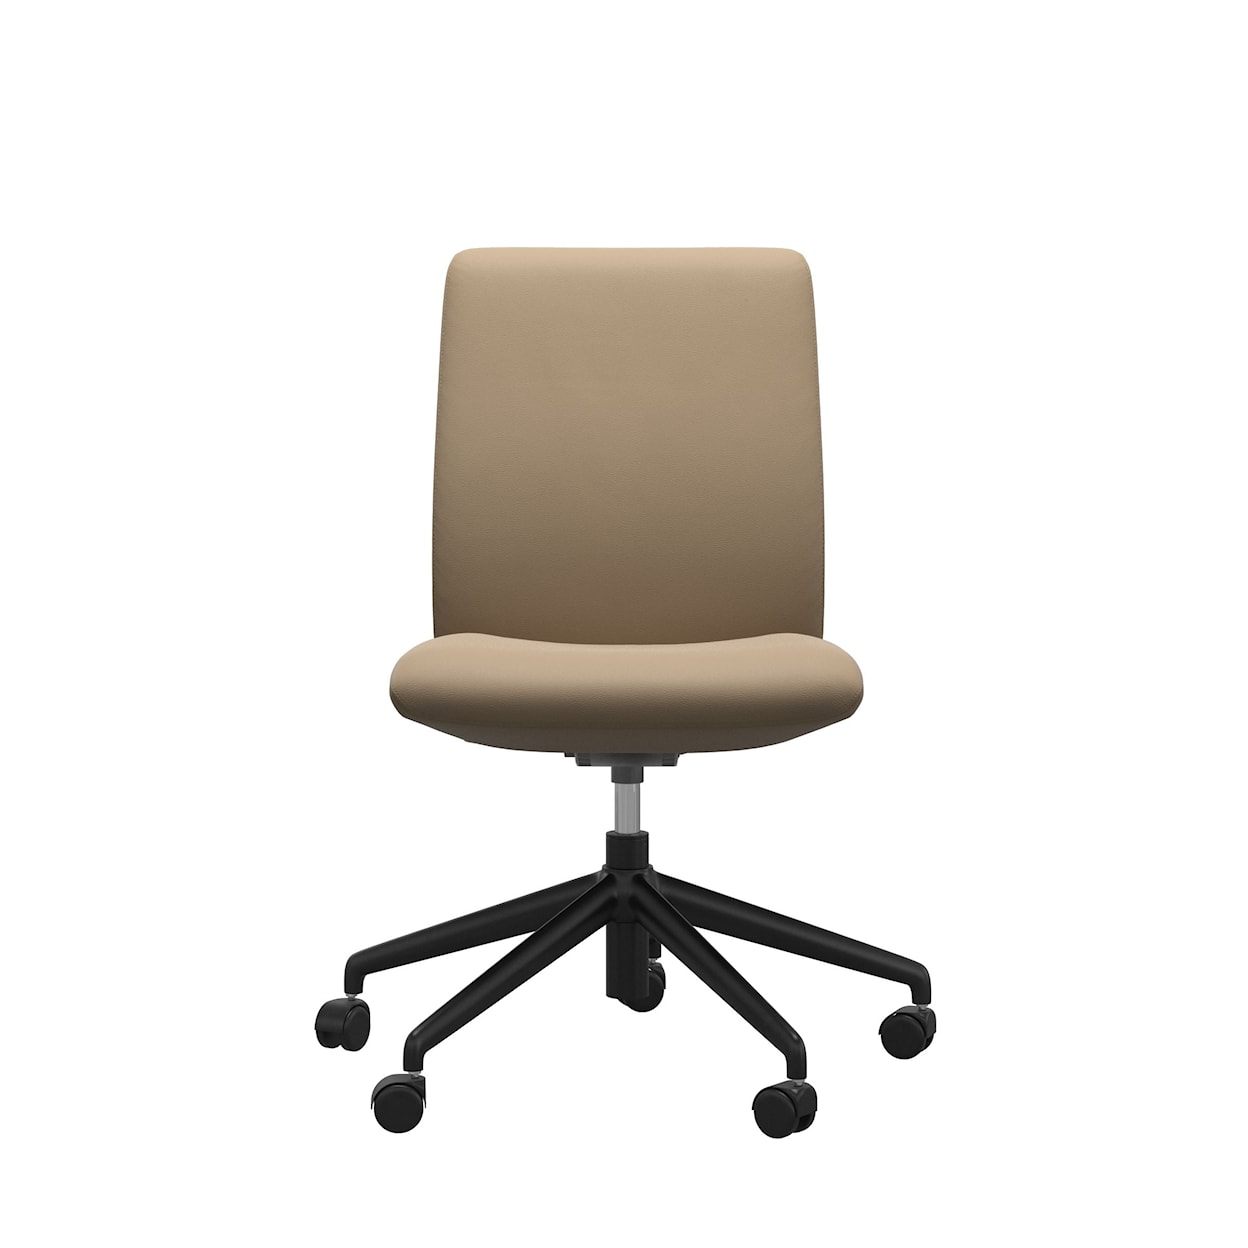 Stressless by Ekornes Laurel Laurel Large Low-Back Office Chair